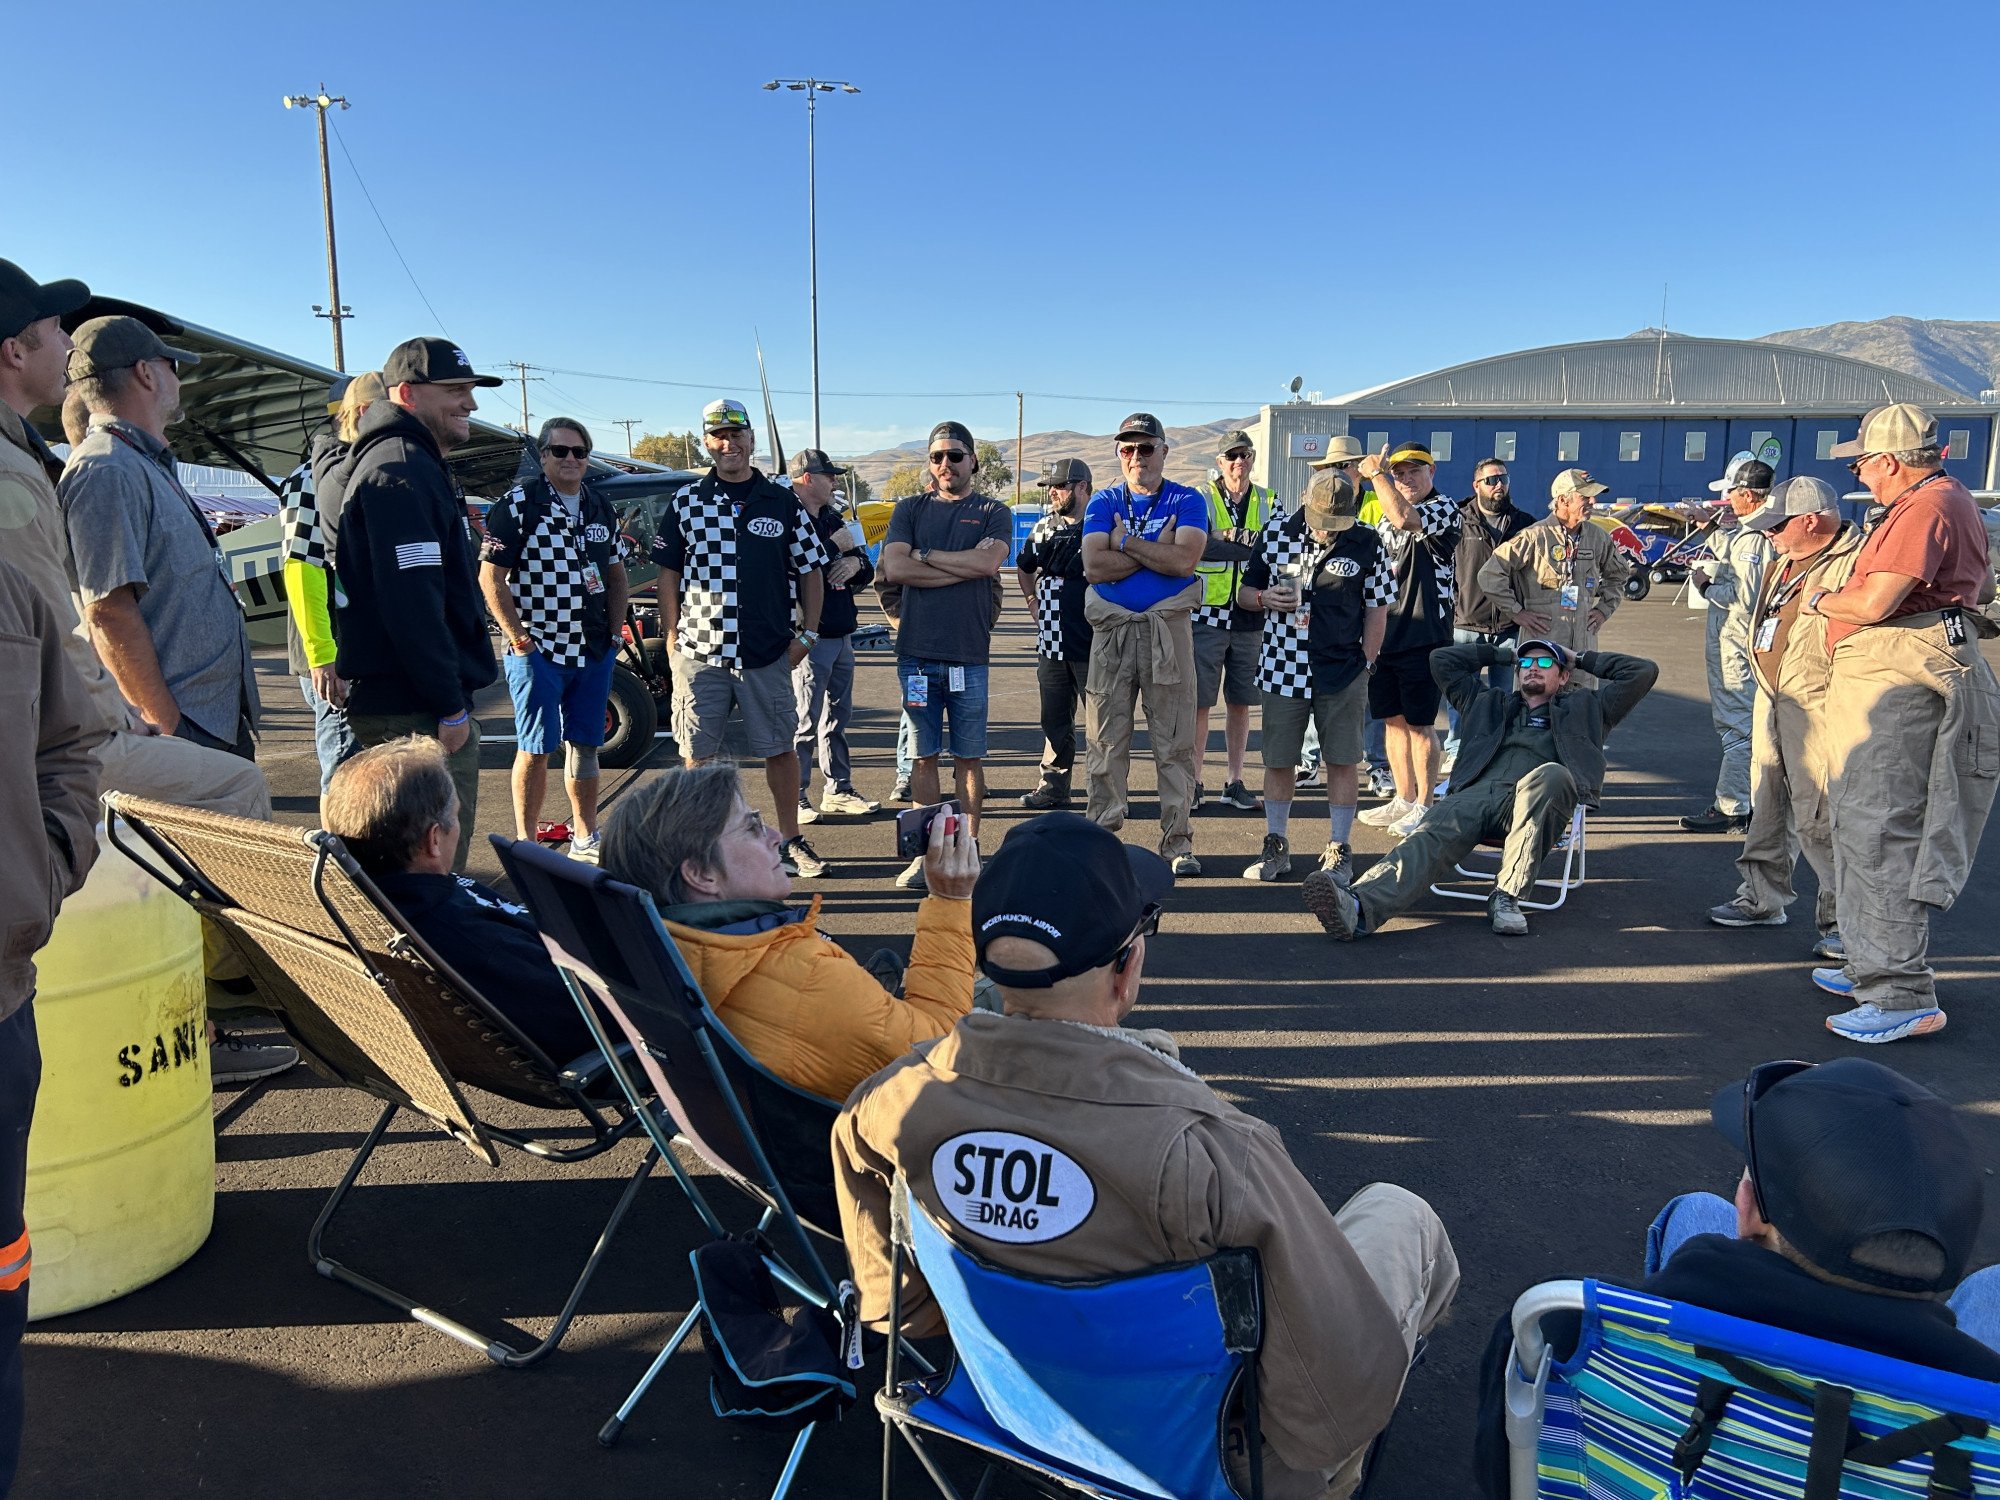 STOL Drag Briefing in the pits at Reno Air Races